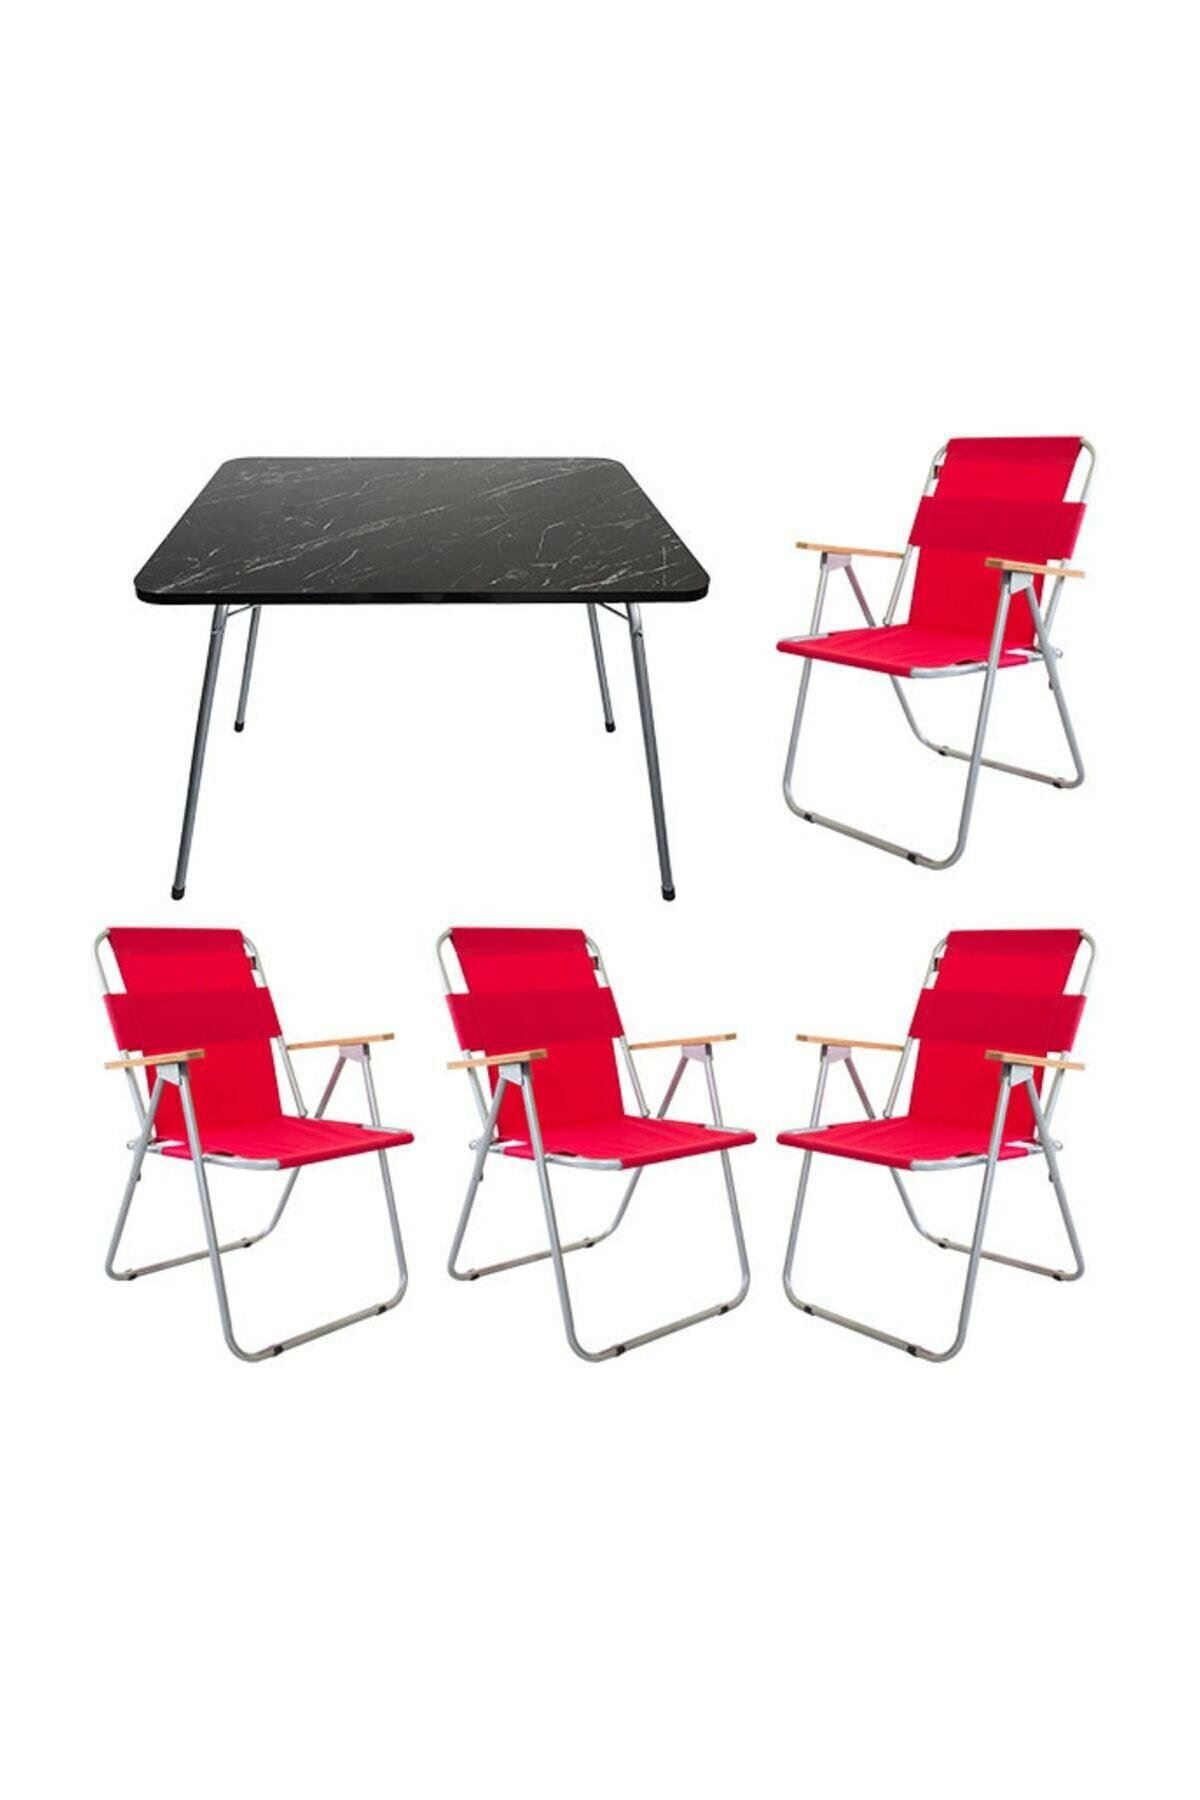 Bofigo 60x80 Granite Folding Table + 4 Pieces Folding Chair Camping Set Garden Balcony Set Red